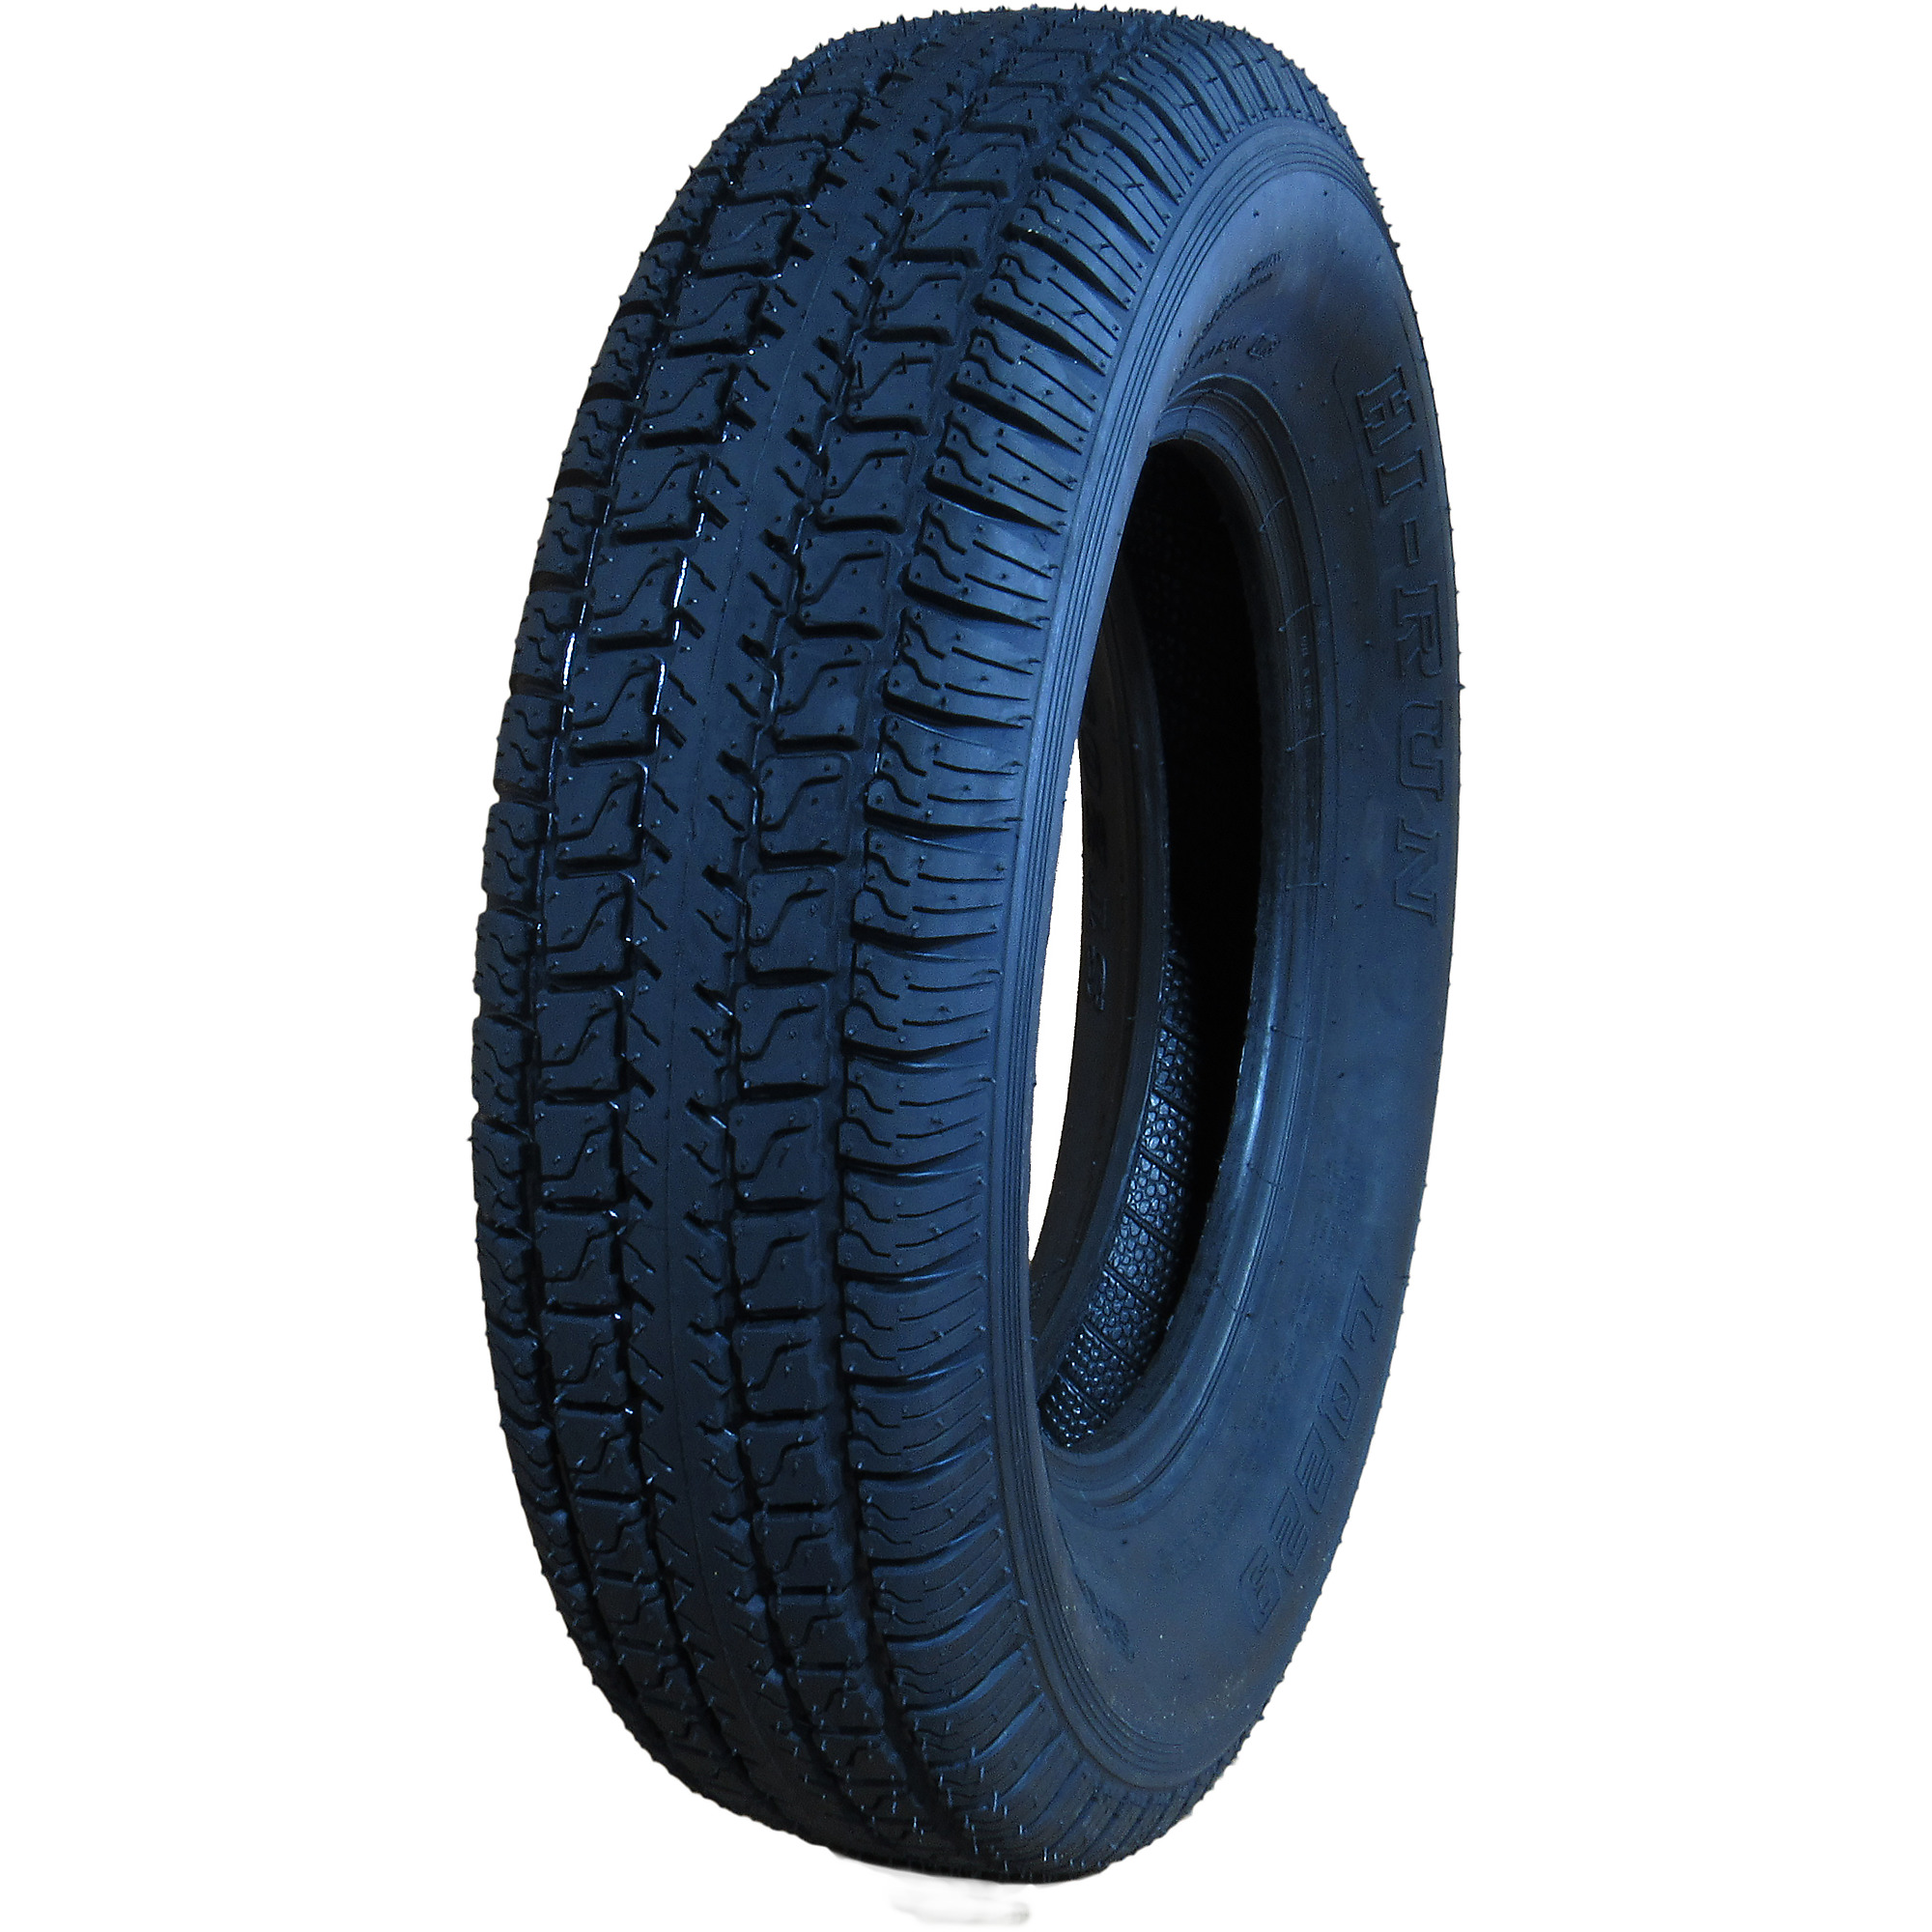 HI-RUN, Highway Trailer Tire, Bias-ply, Tire Size ST225/75D15 Load Range Rating D, Model LZ1007